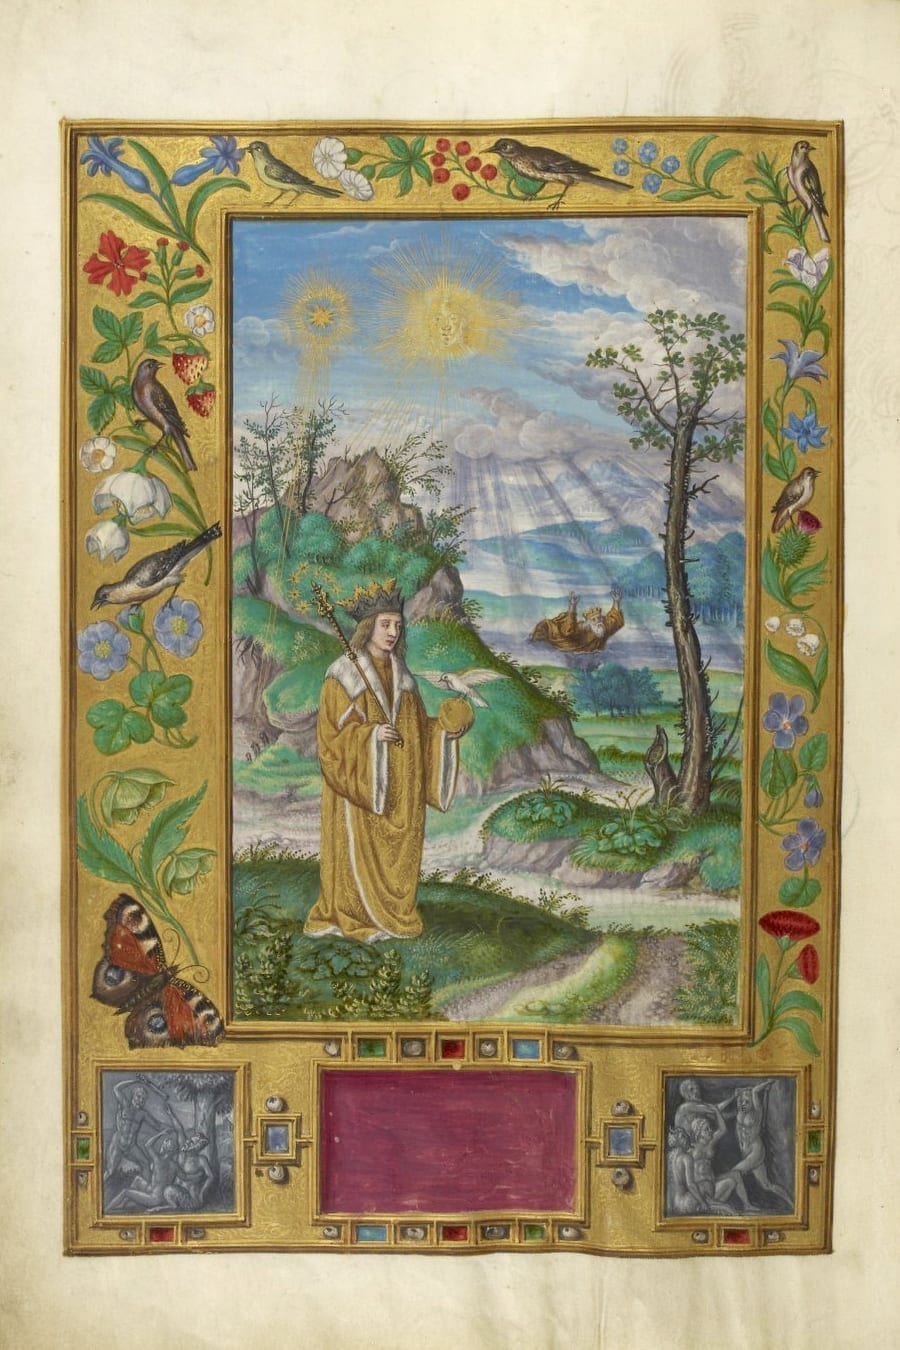 Illustration of drowning king from the Alchemical manuscript Splendor Solis